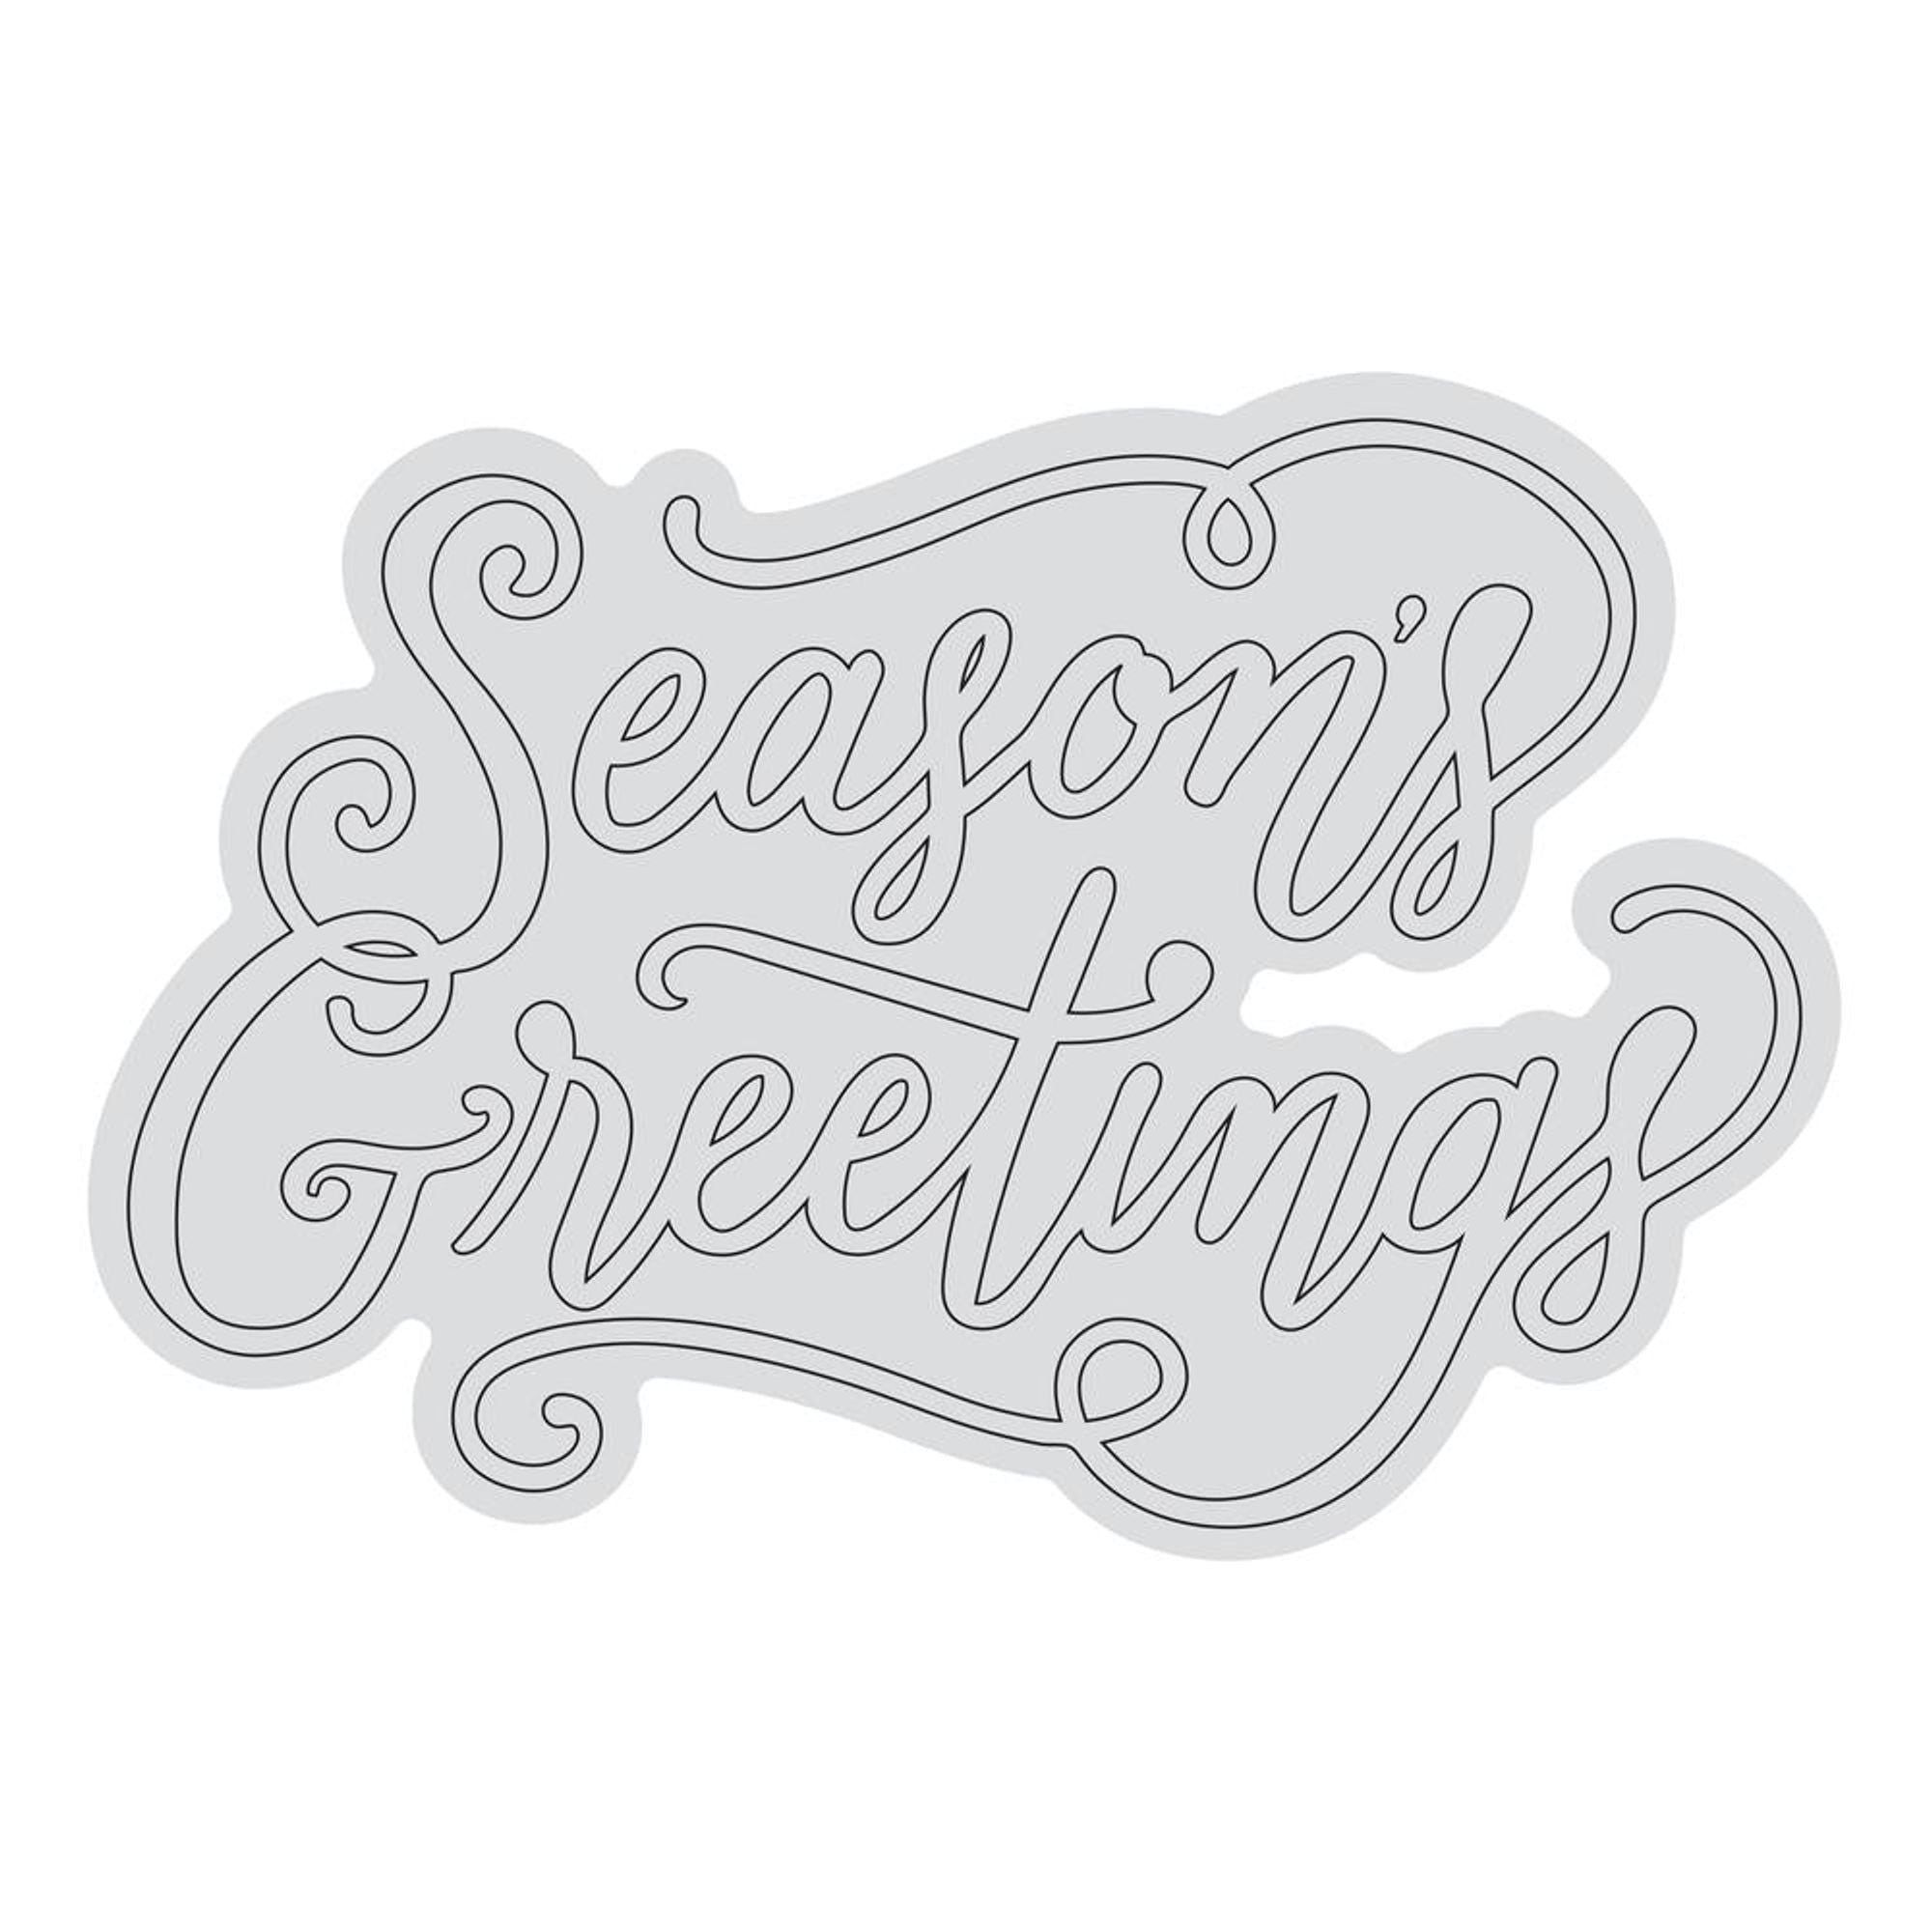 Season's Greetings Outline Stamp (1pc)